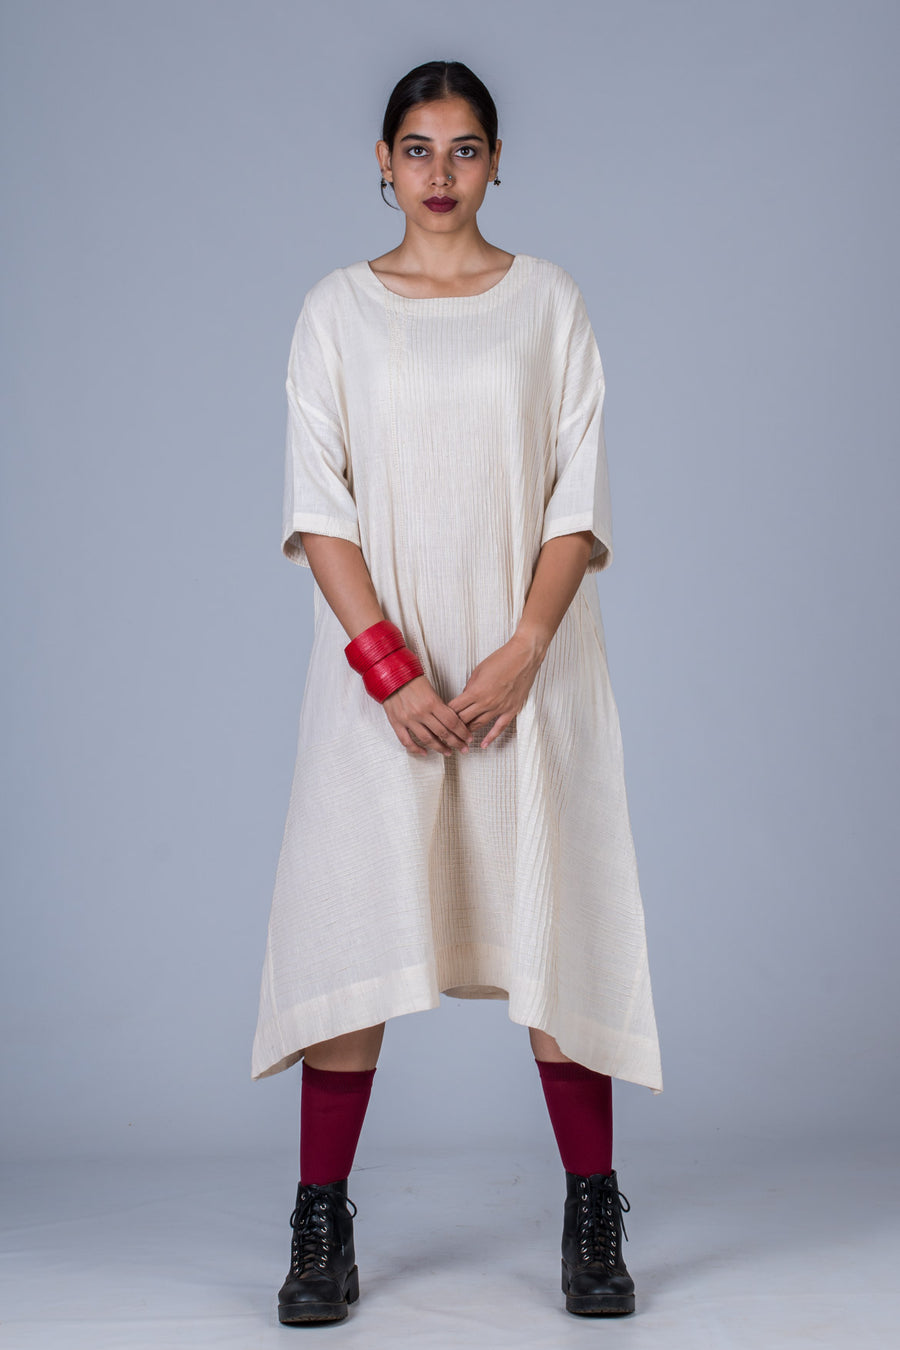 Off White Desi Cotton Dress - KARL - Upasana Design Studio